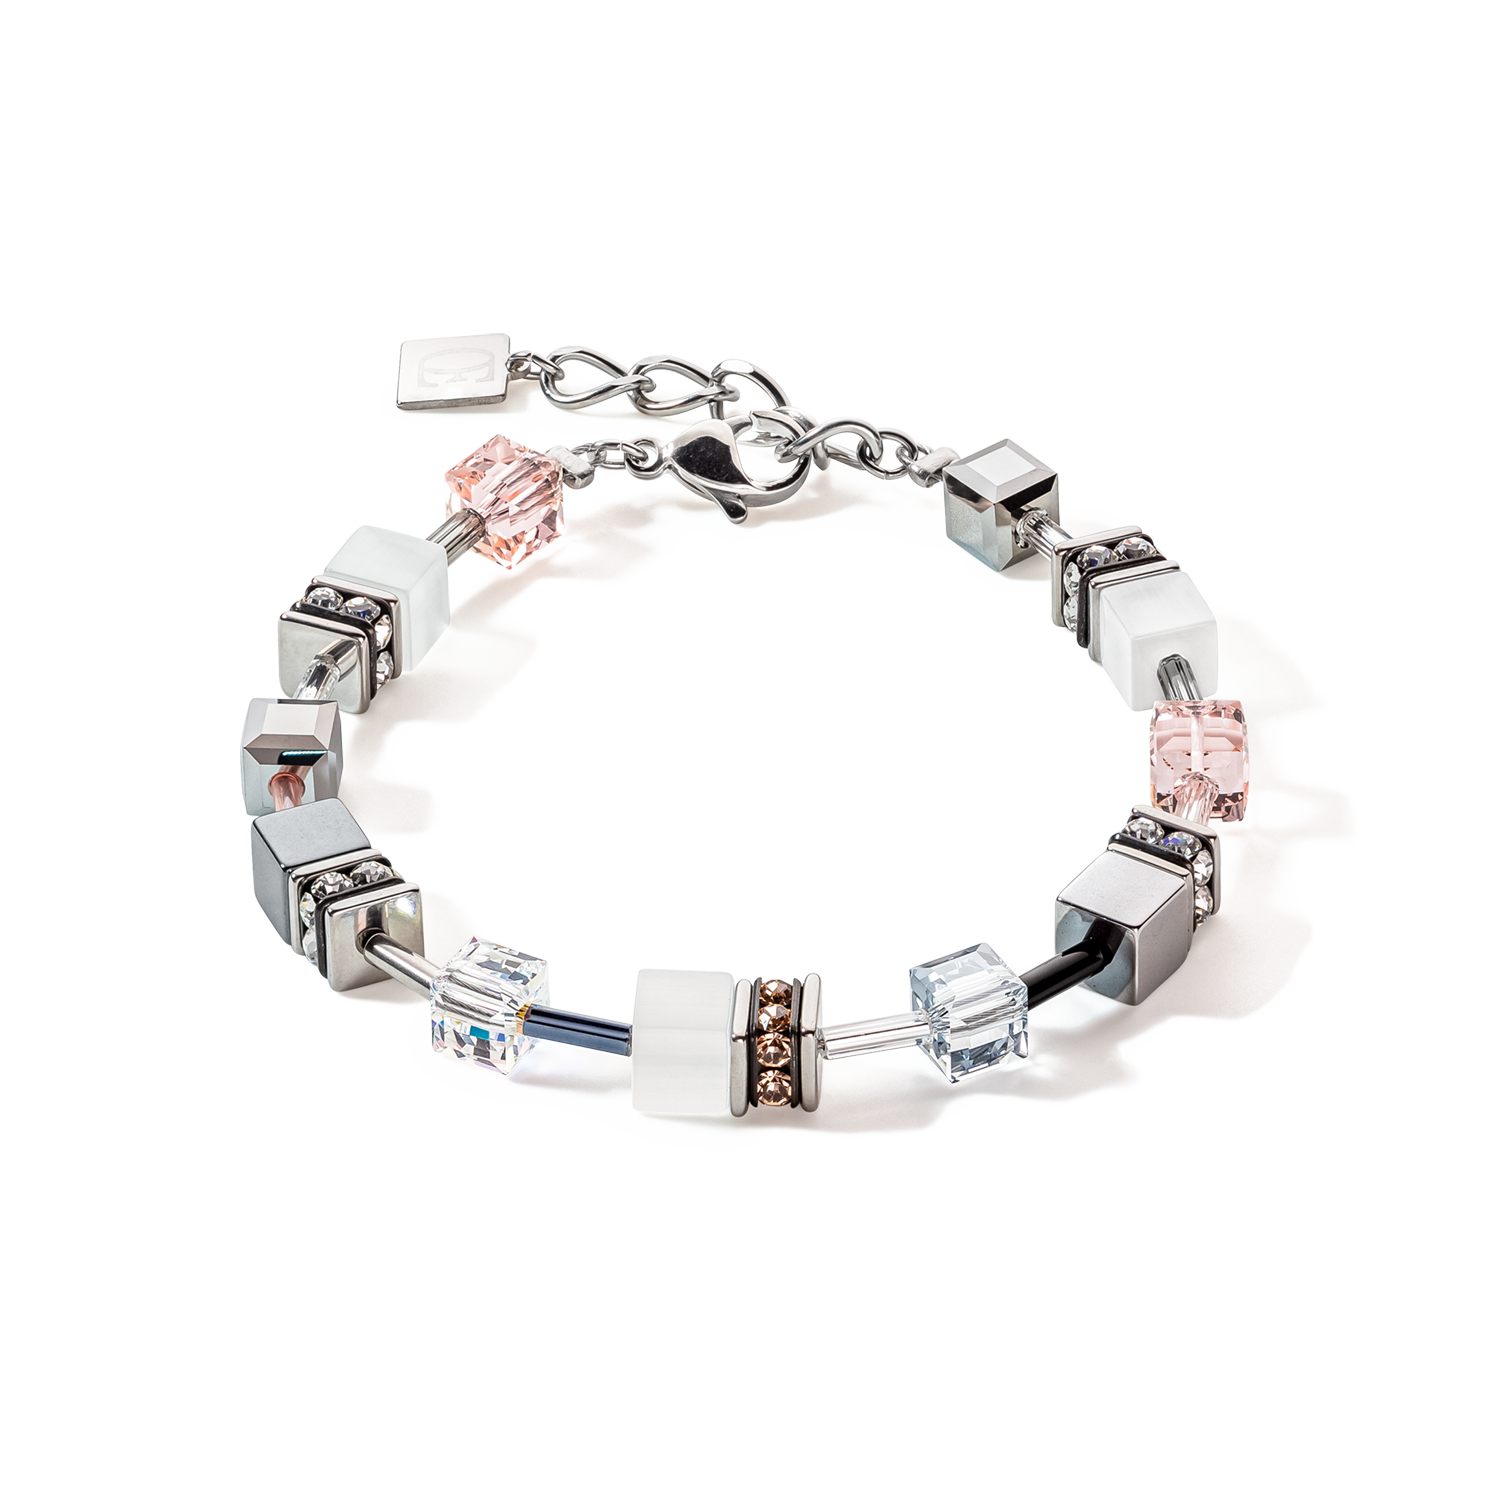 GeoCUBE® Iconic Monochrome bracelet peach